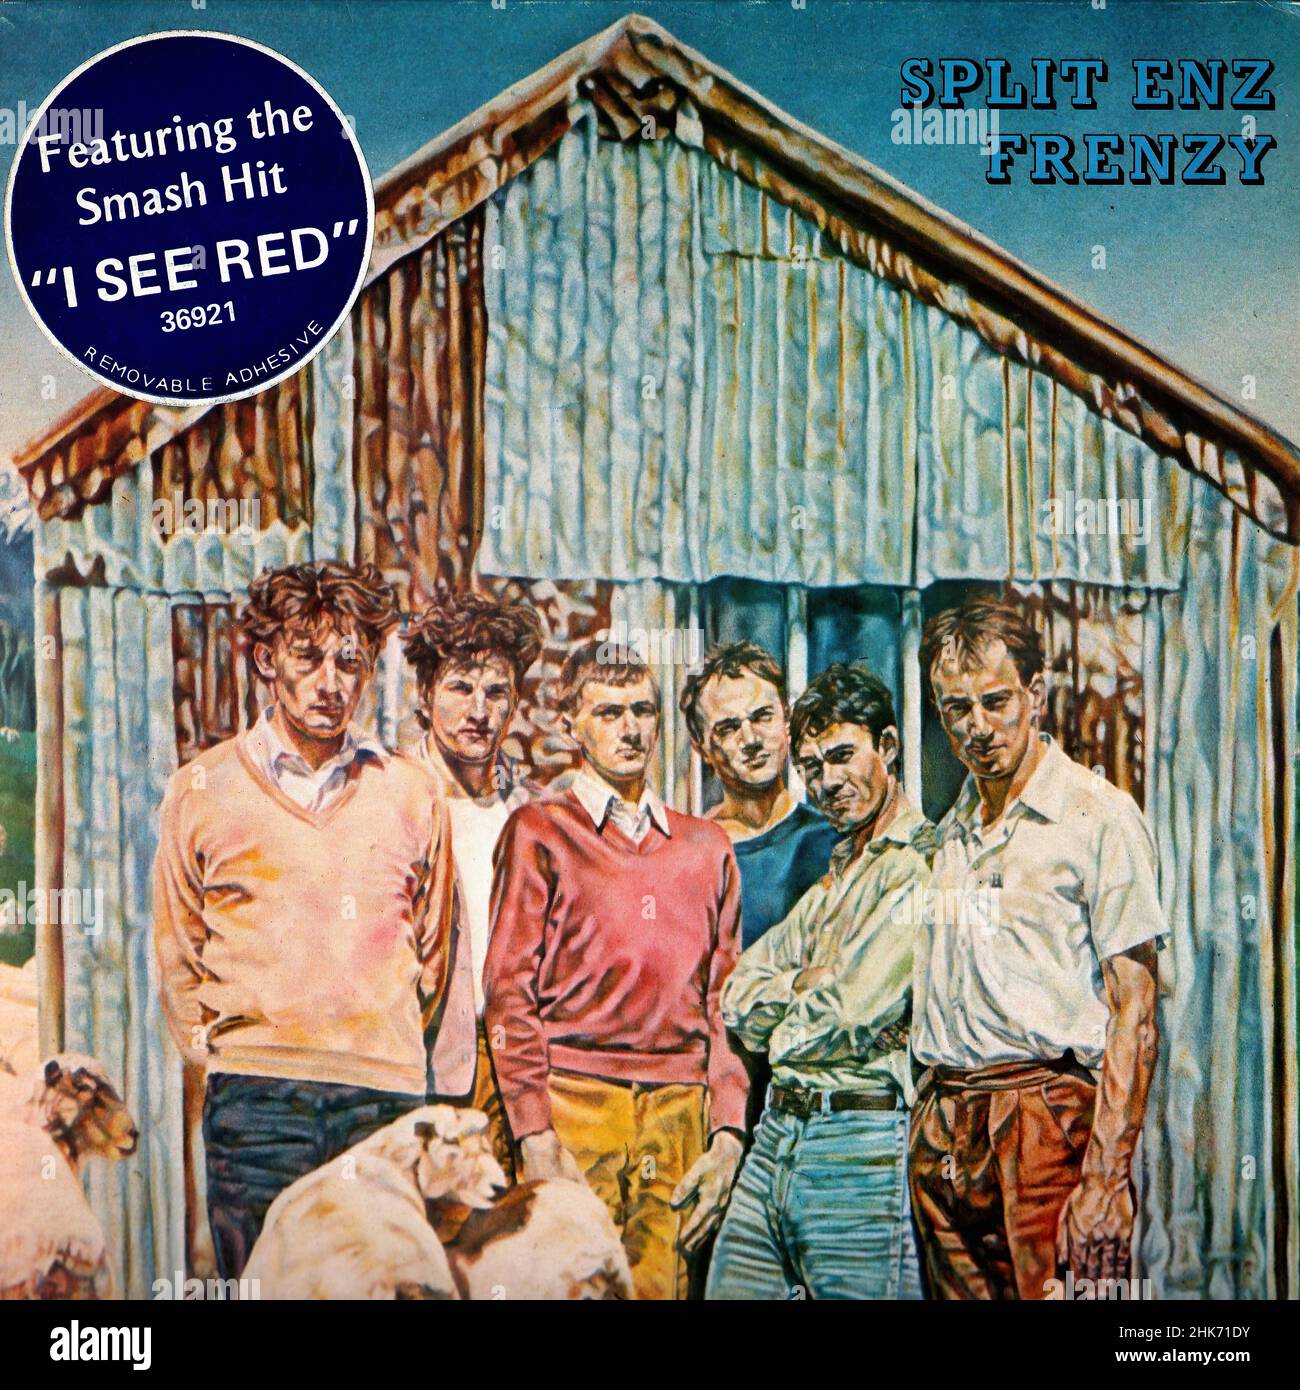 Vintage vinyl record cover - Split Enz - Frenzy - Australia - 1979 Stock Photo